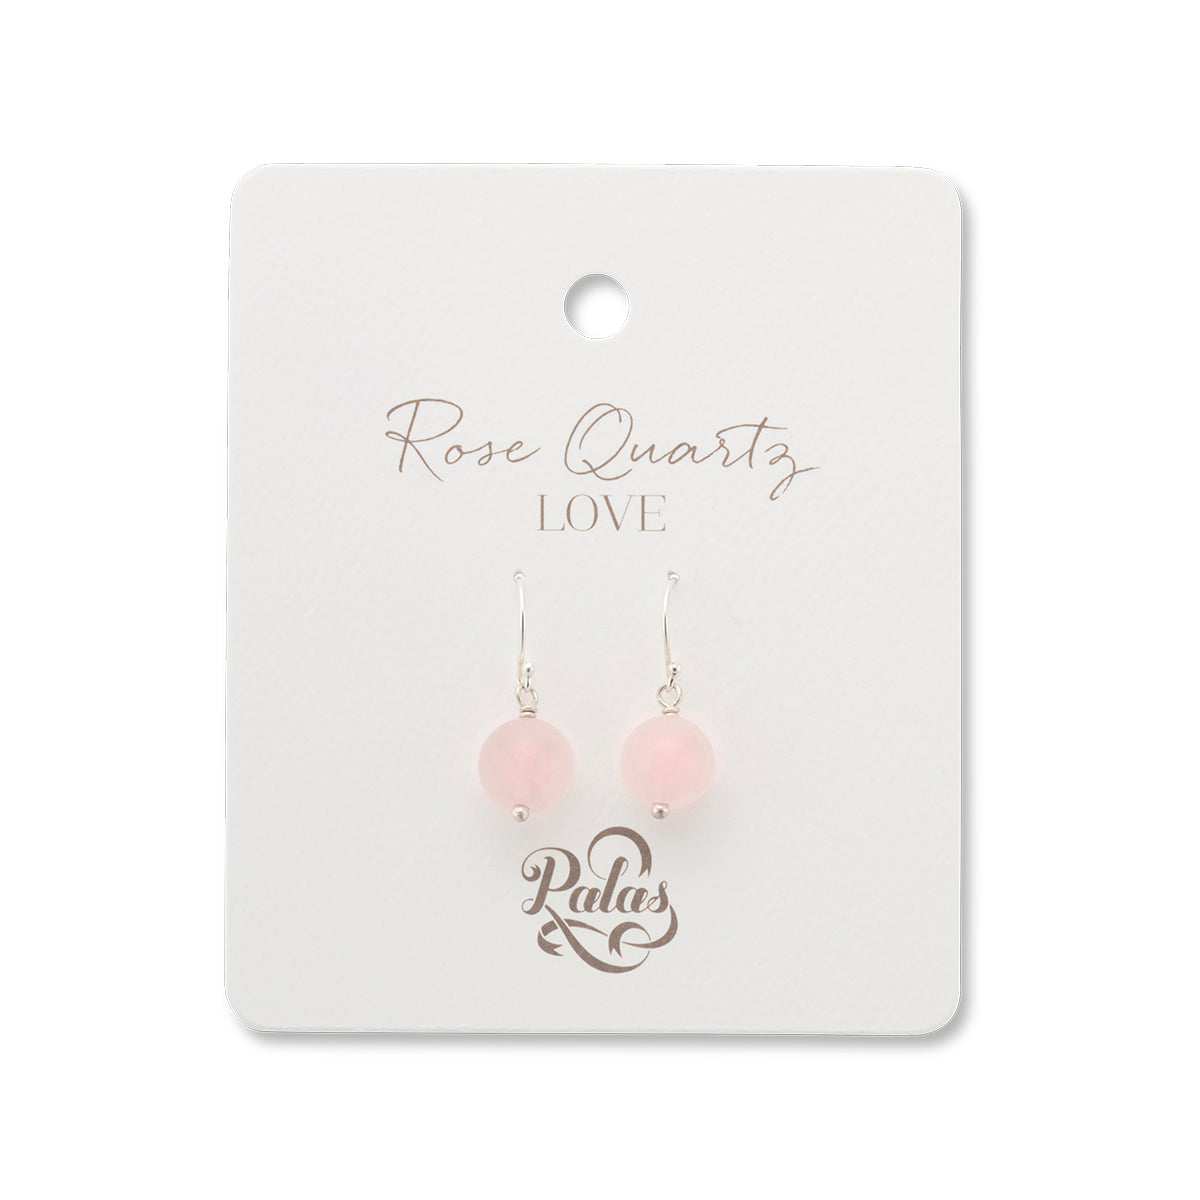 Rose quartz healing gem earrings